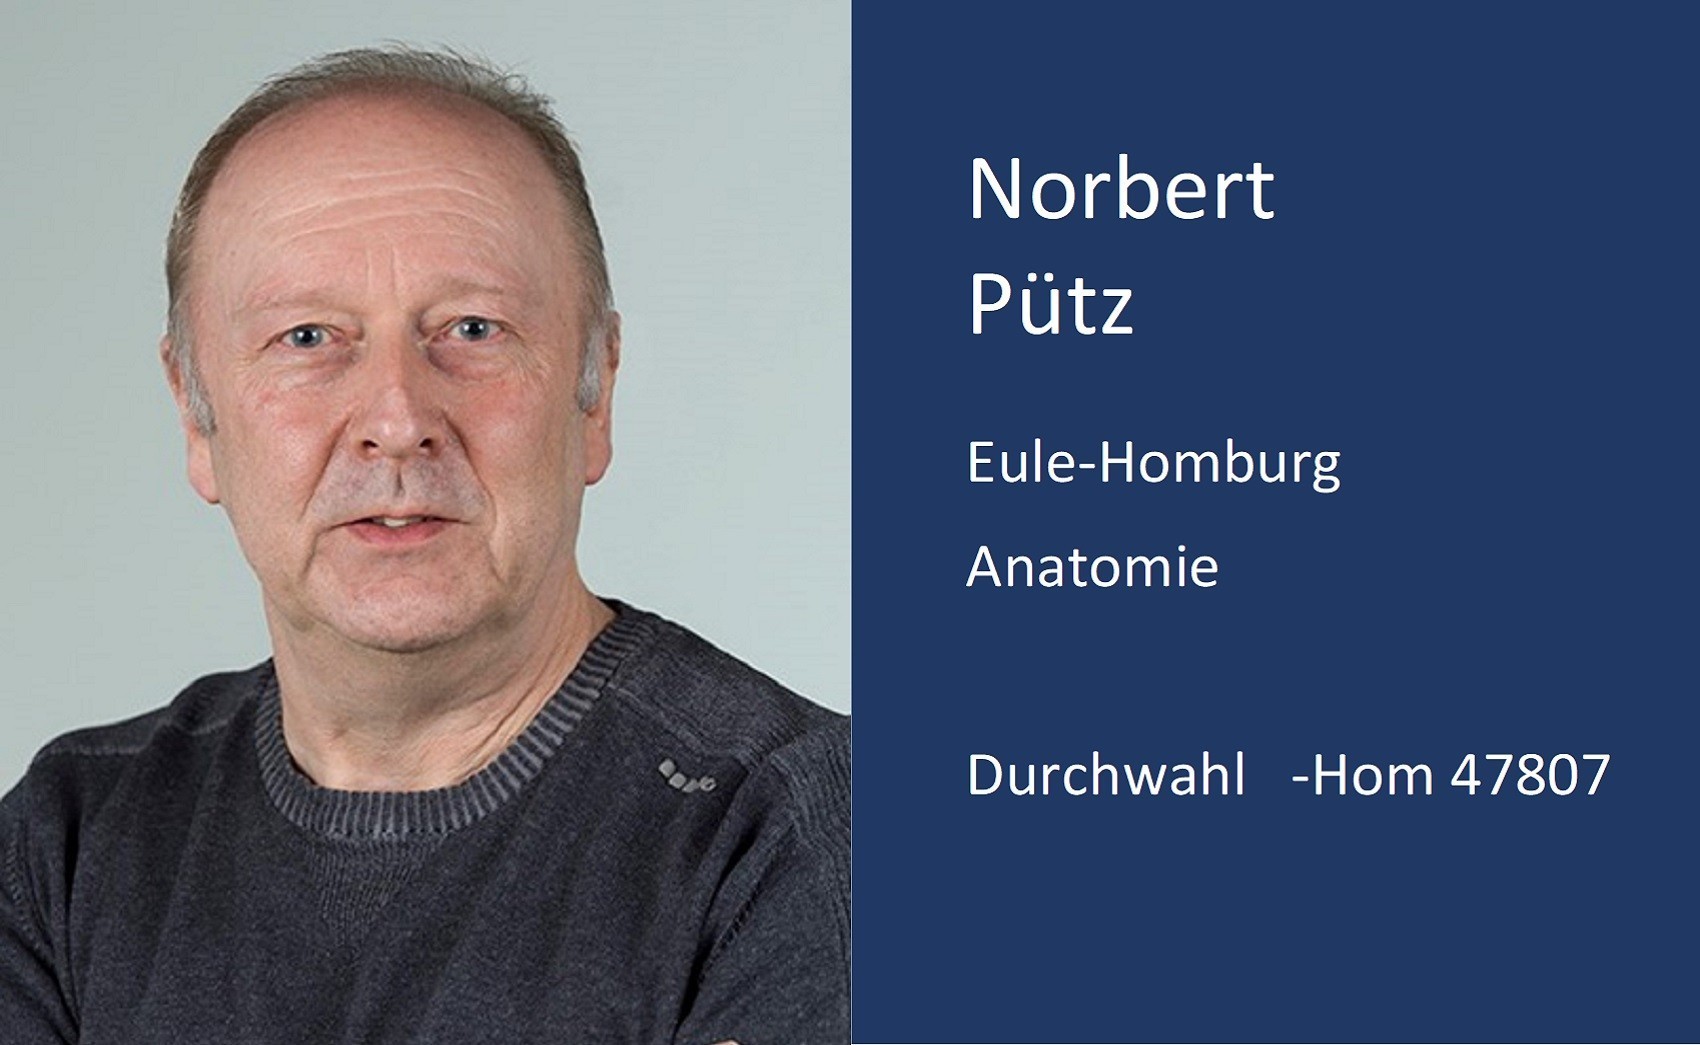 Norbert Pütz, Kontaktdaten, Durchwahl, Homburg, 4 7 8 0 7, Email, norbert . pütz,  ät, u, k, s, . e, u 